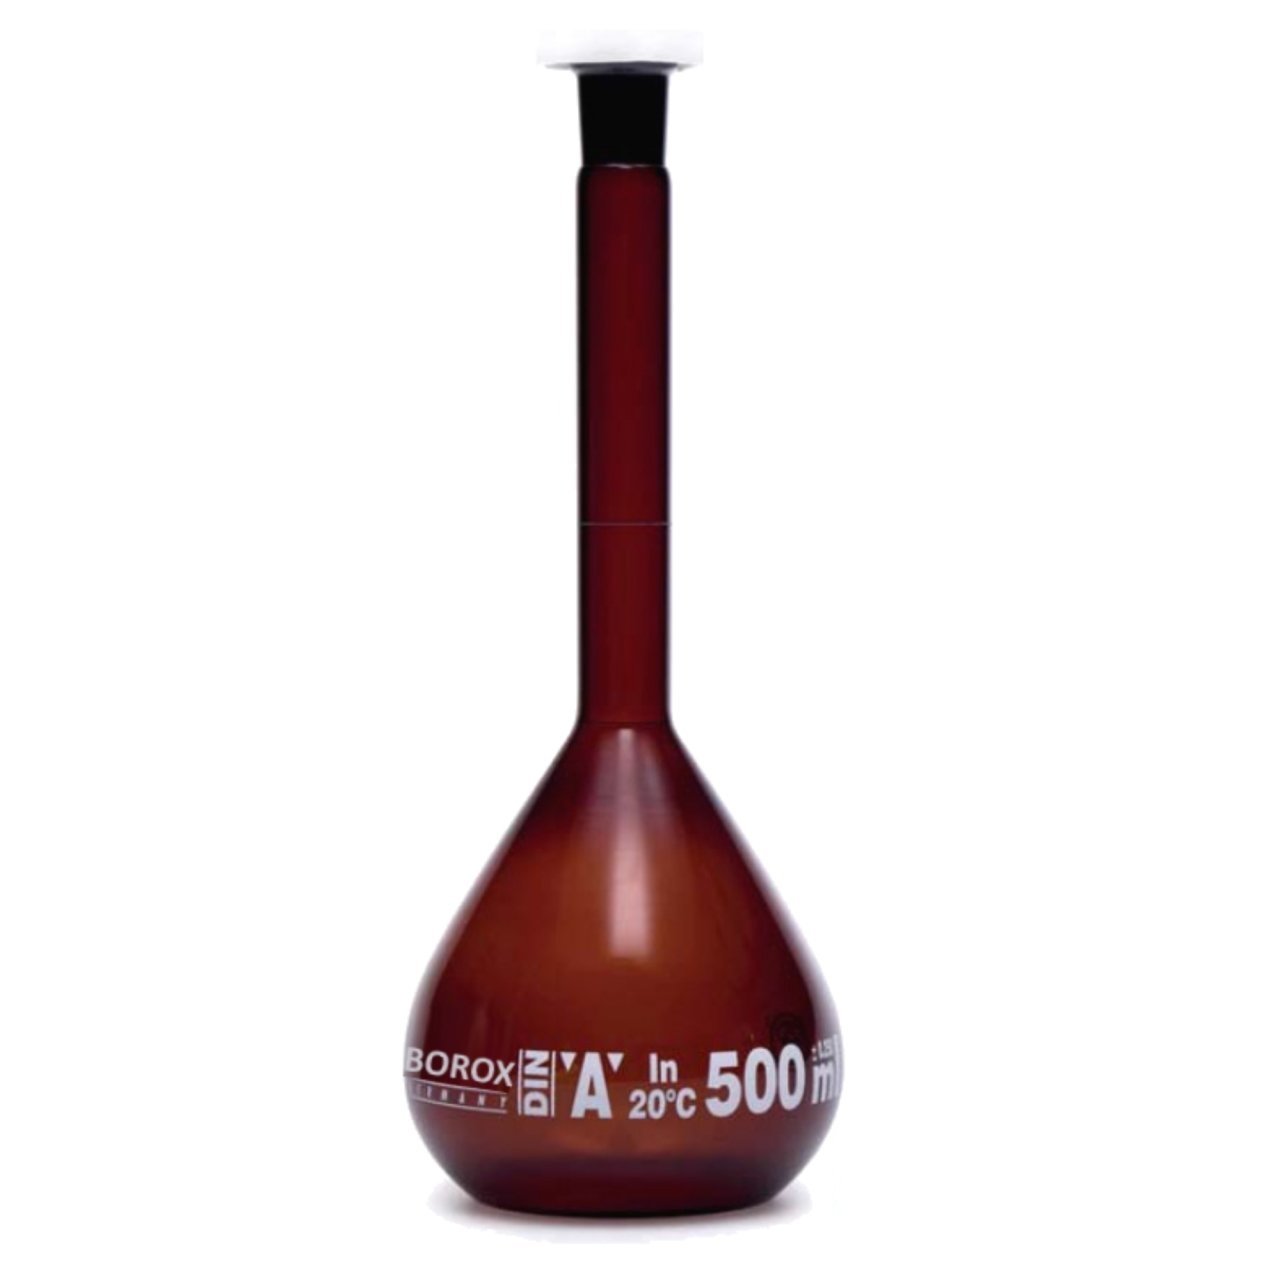 Borox Cam Balon Joje 500 ml Amber - Plastik Kapaklı Class A